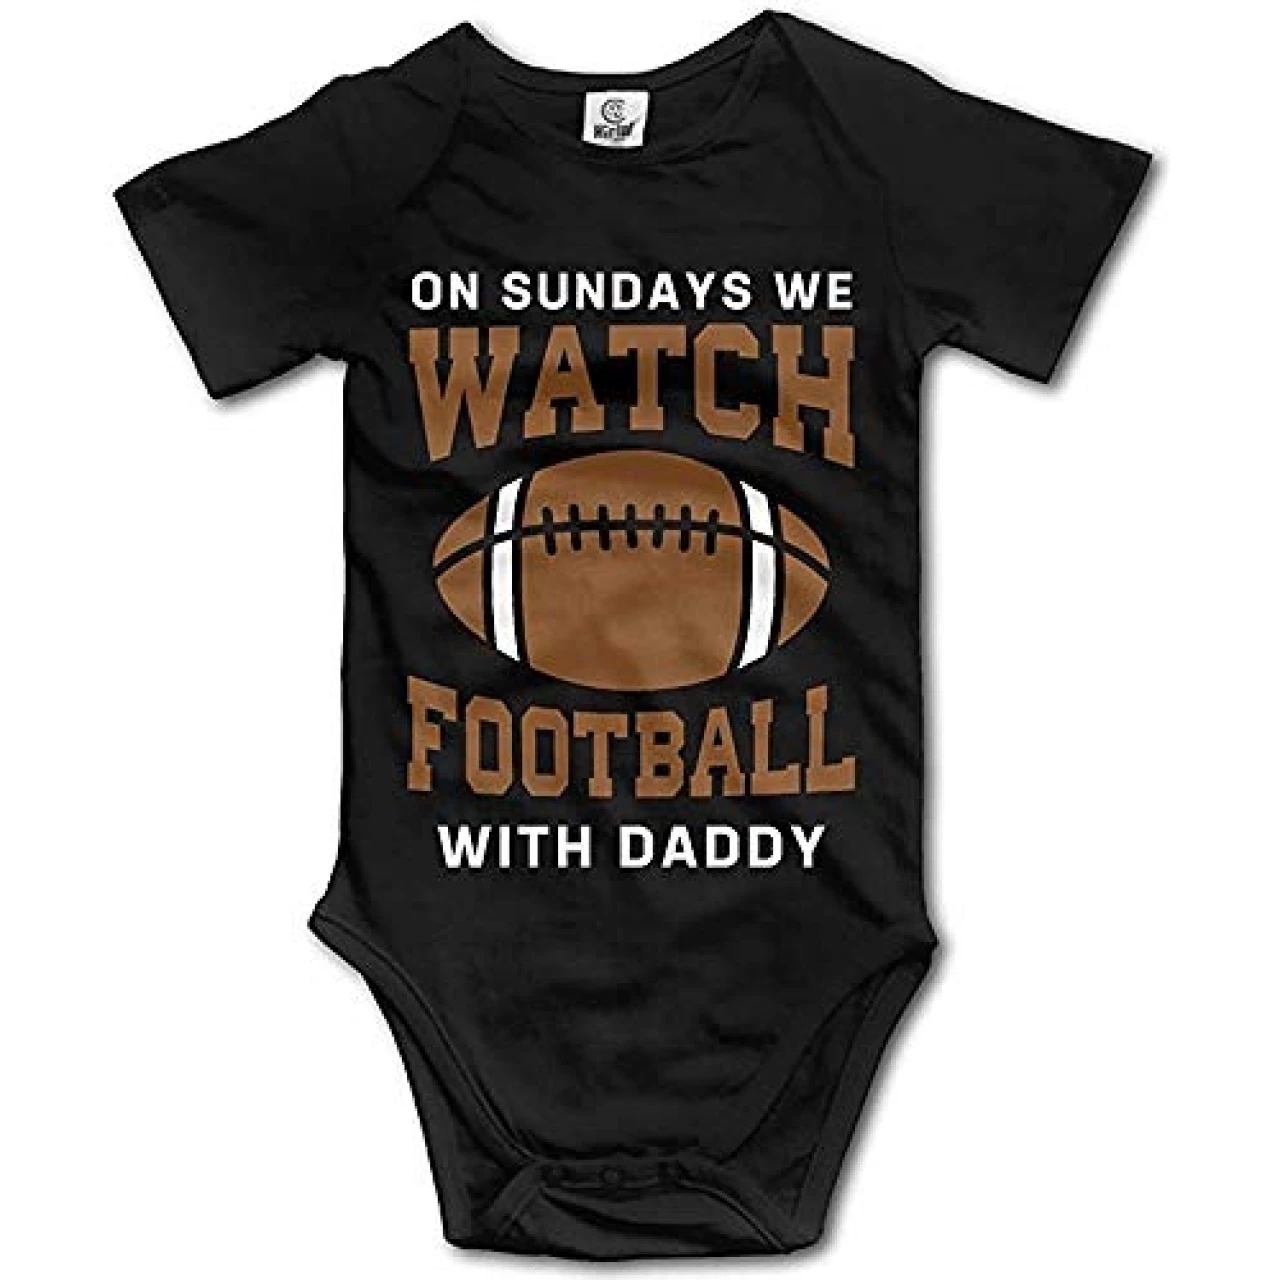 On Sundays We Watch Football with Daddy - Cute Baby Bodysuit Short Sleeve Romper Black